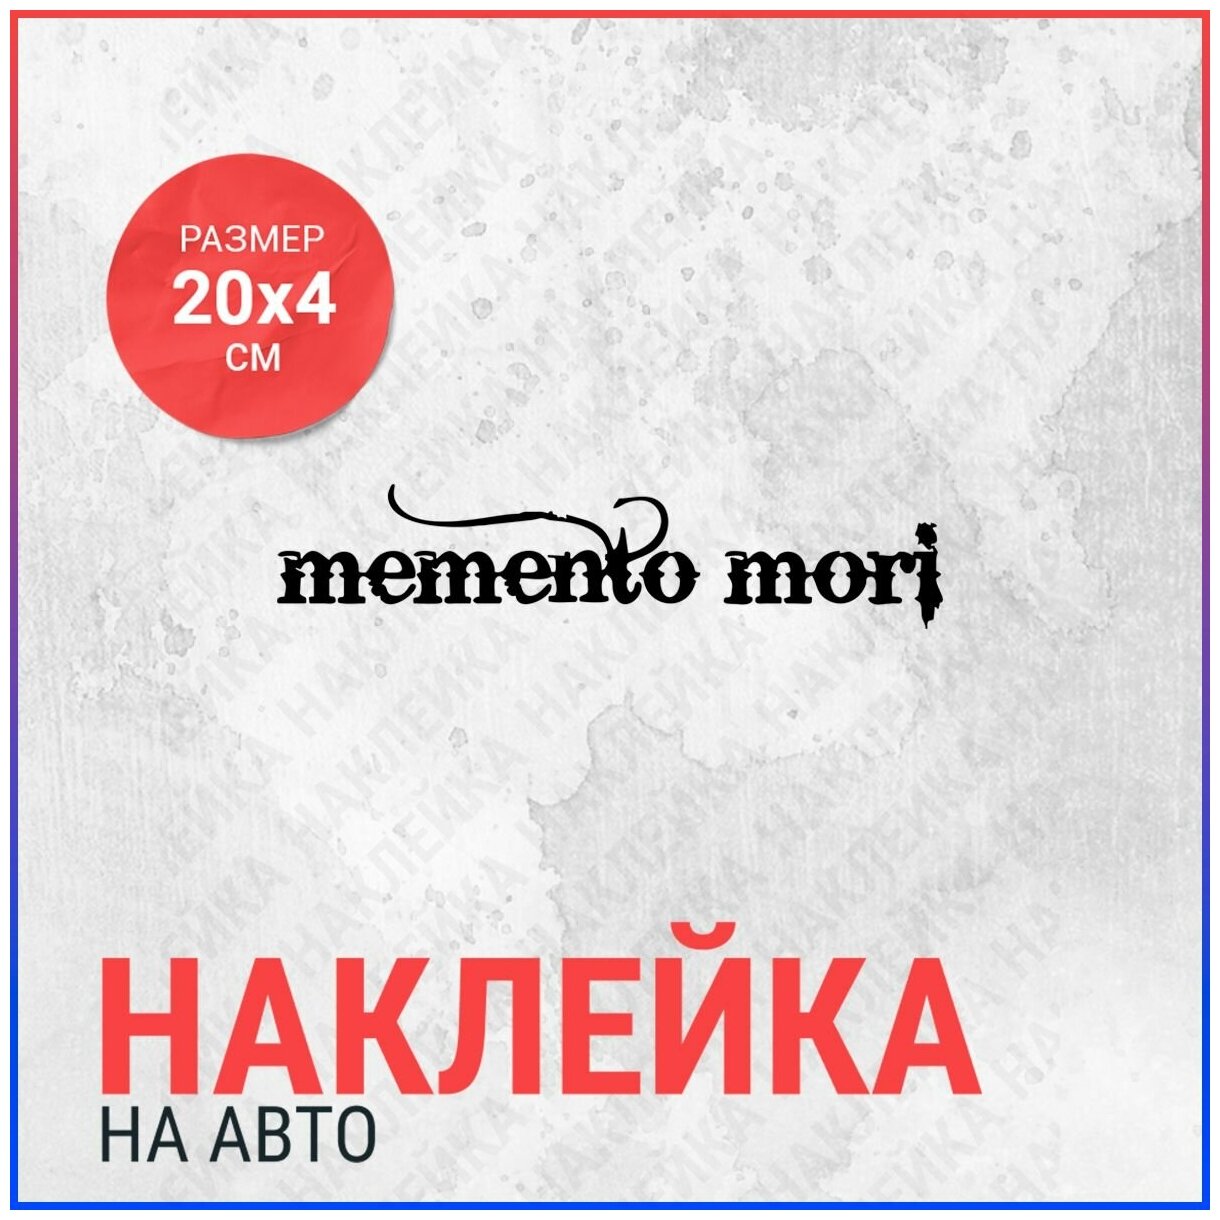 Наклейка на авто 20х4 Memento mori (3)